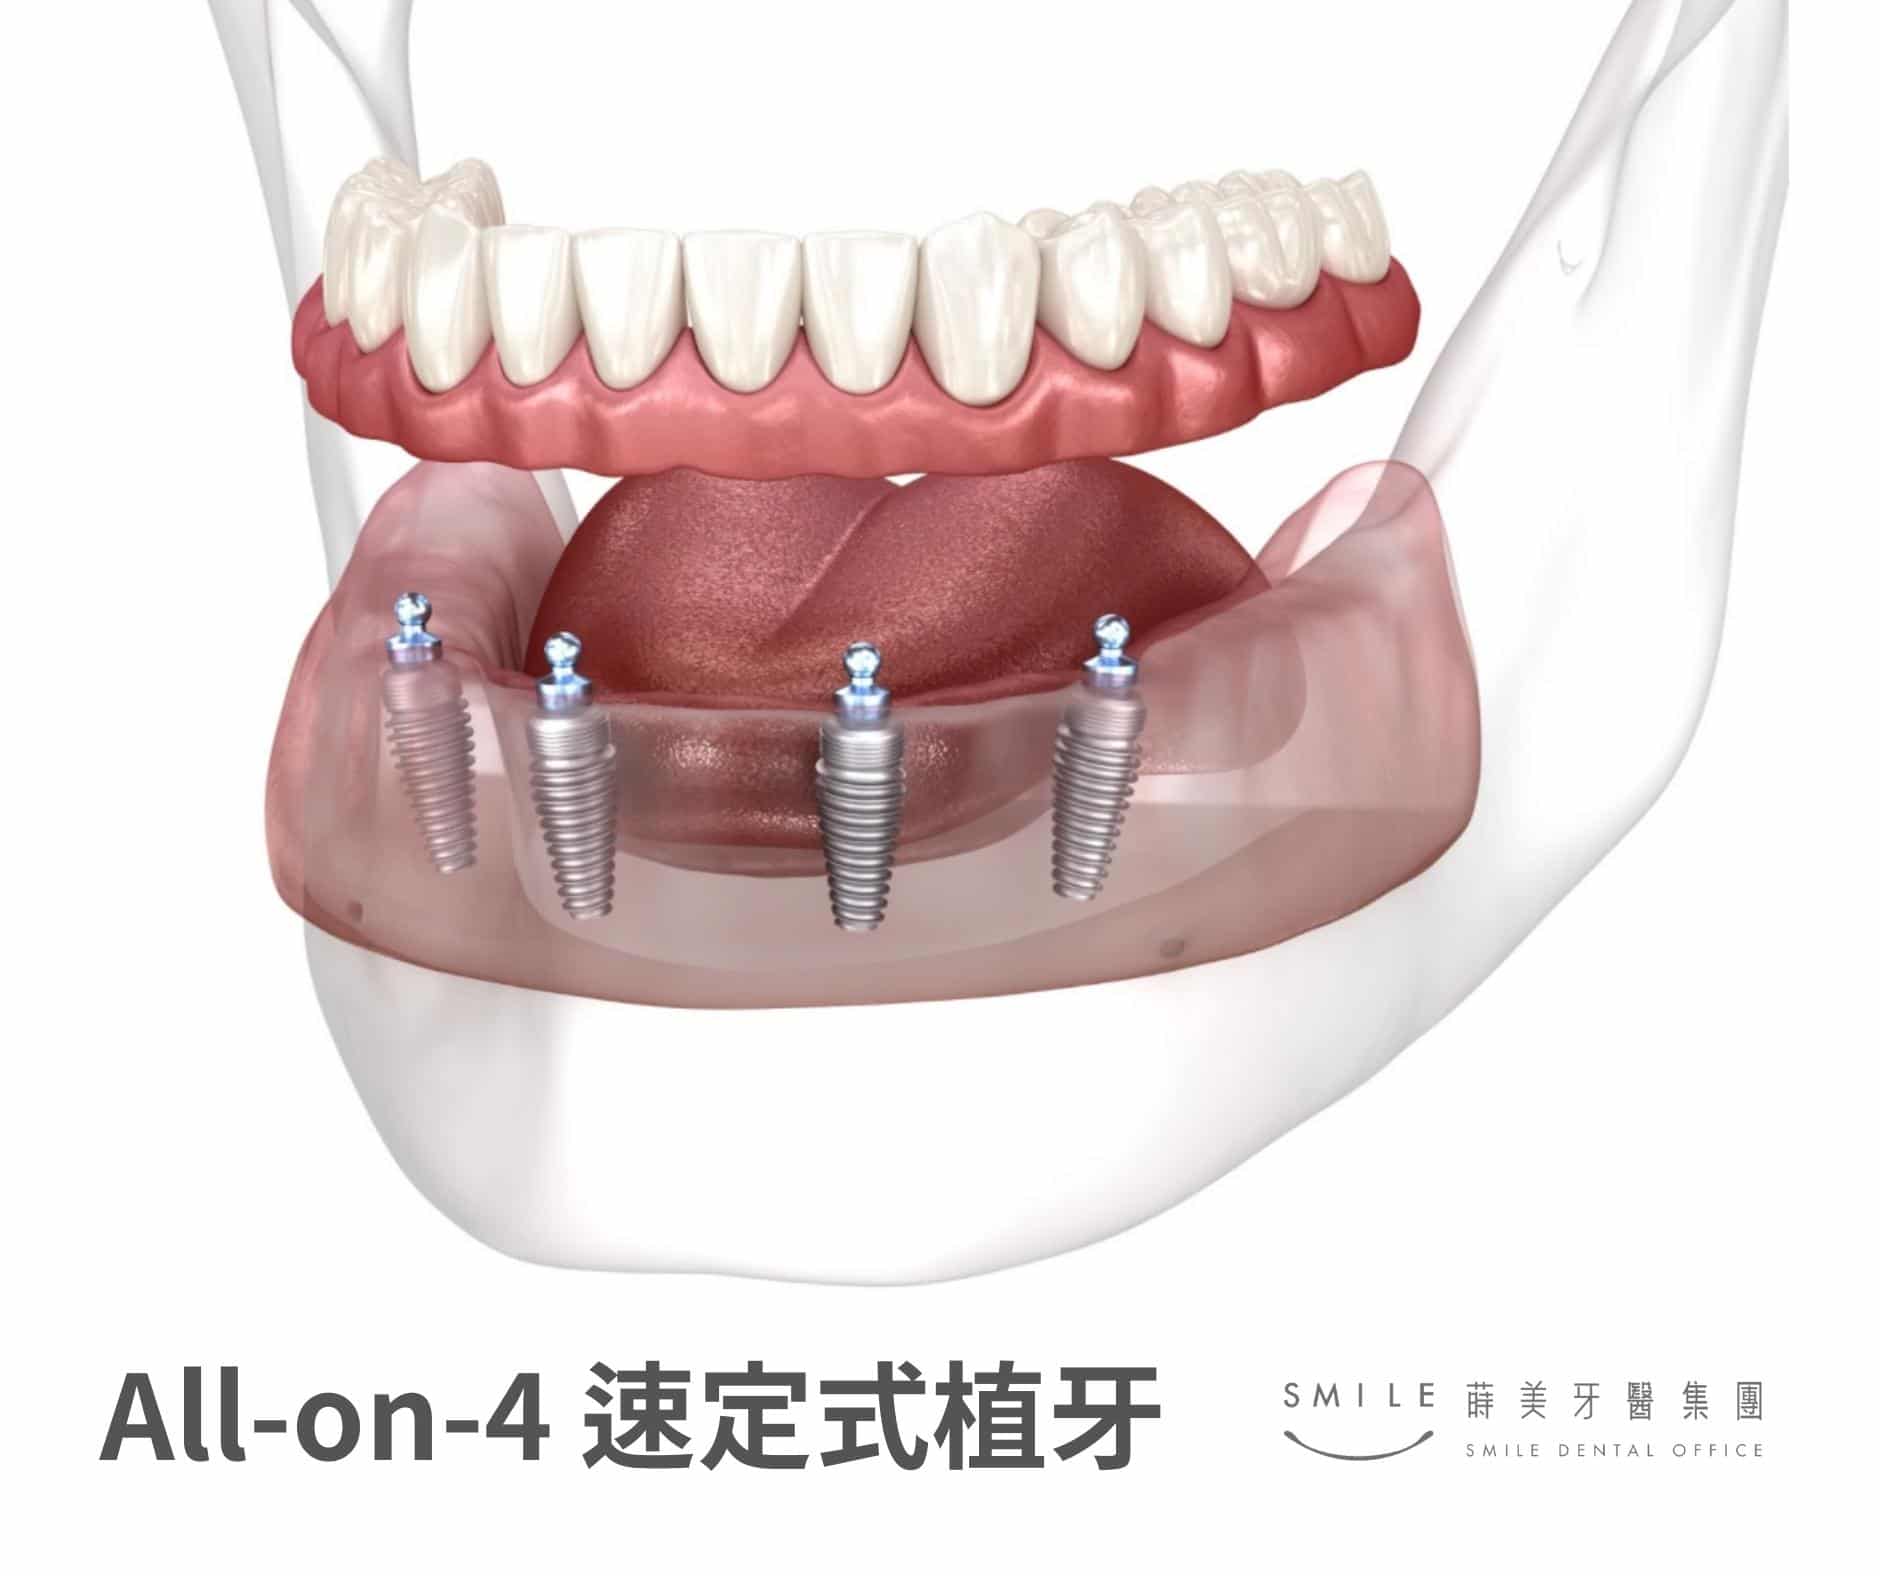 All-on-4速定式植牙